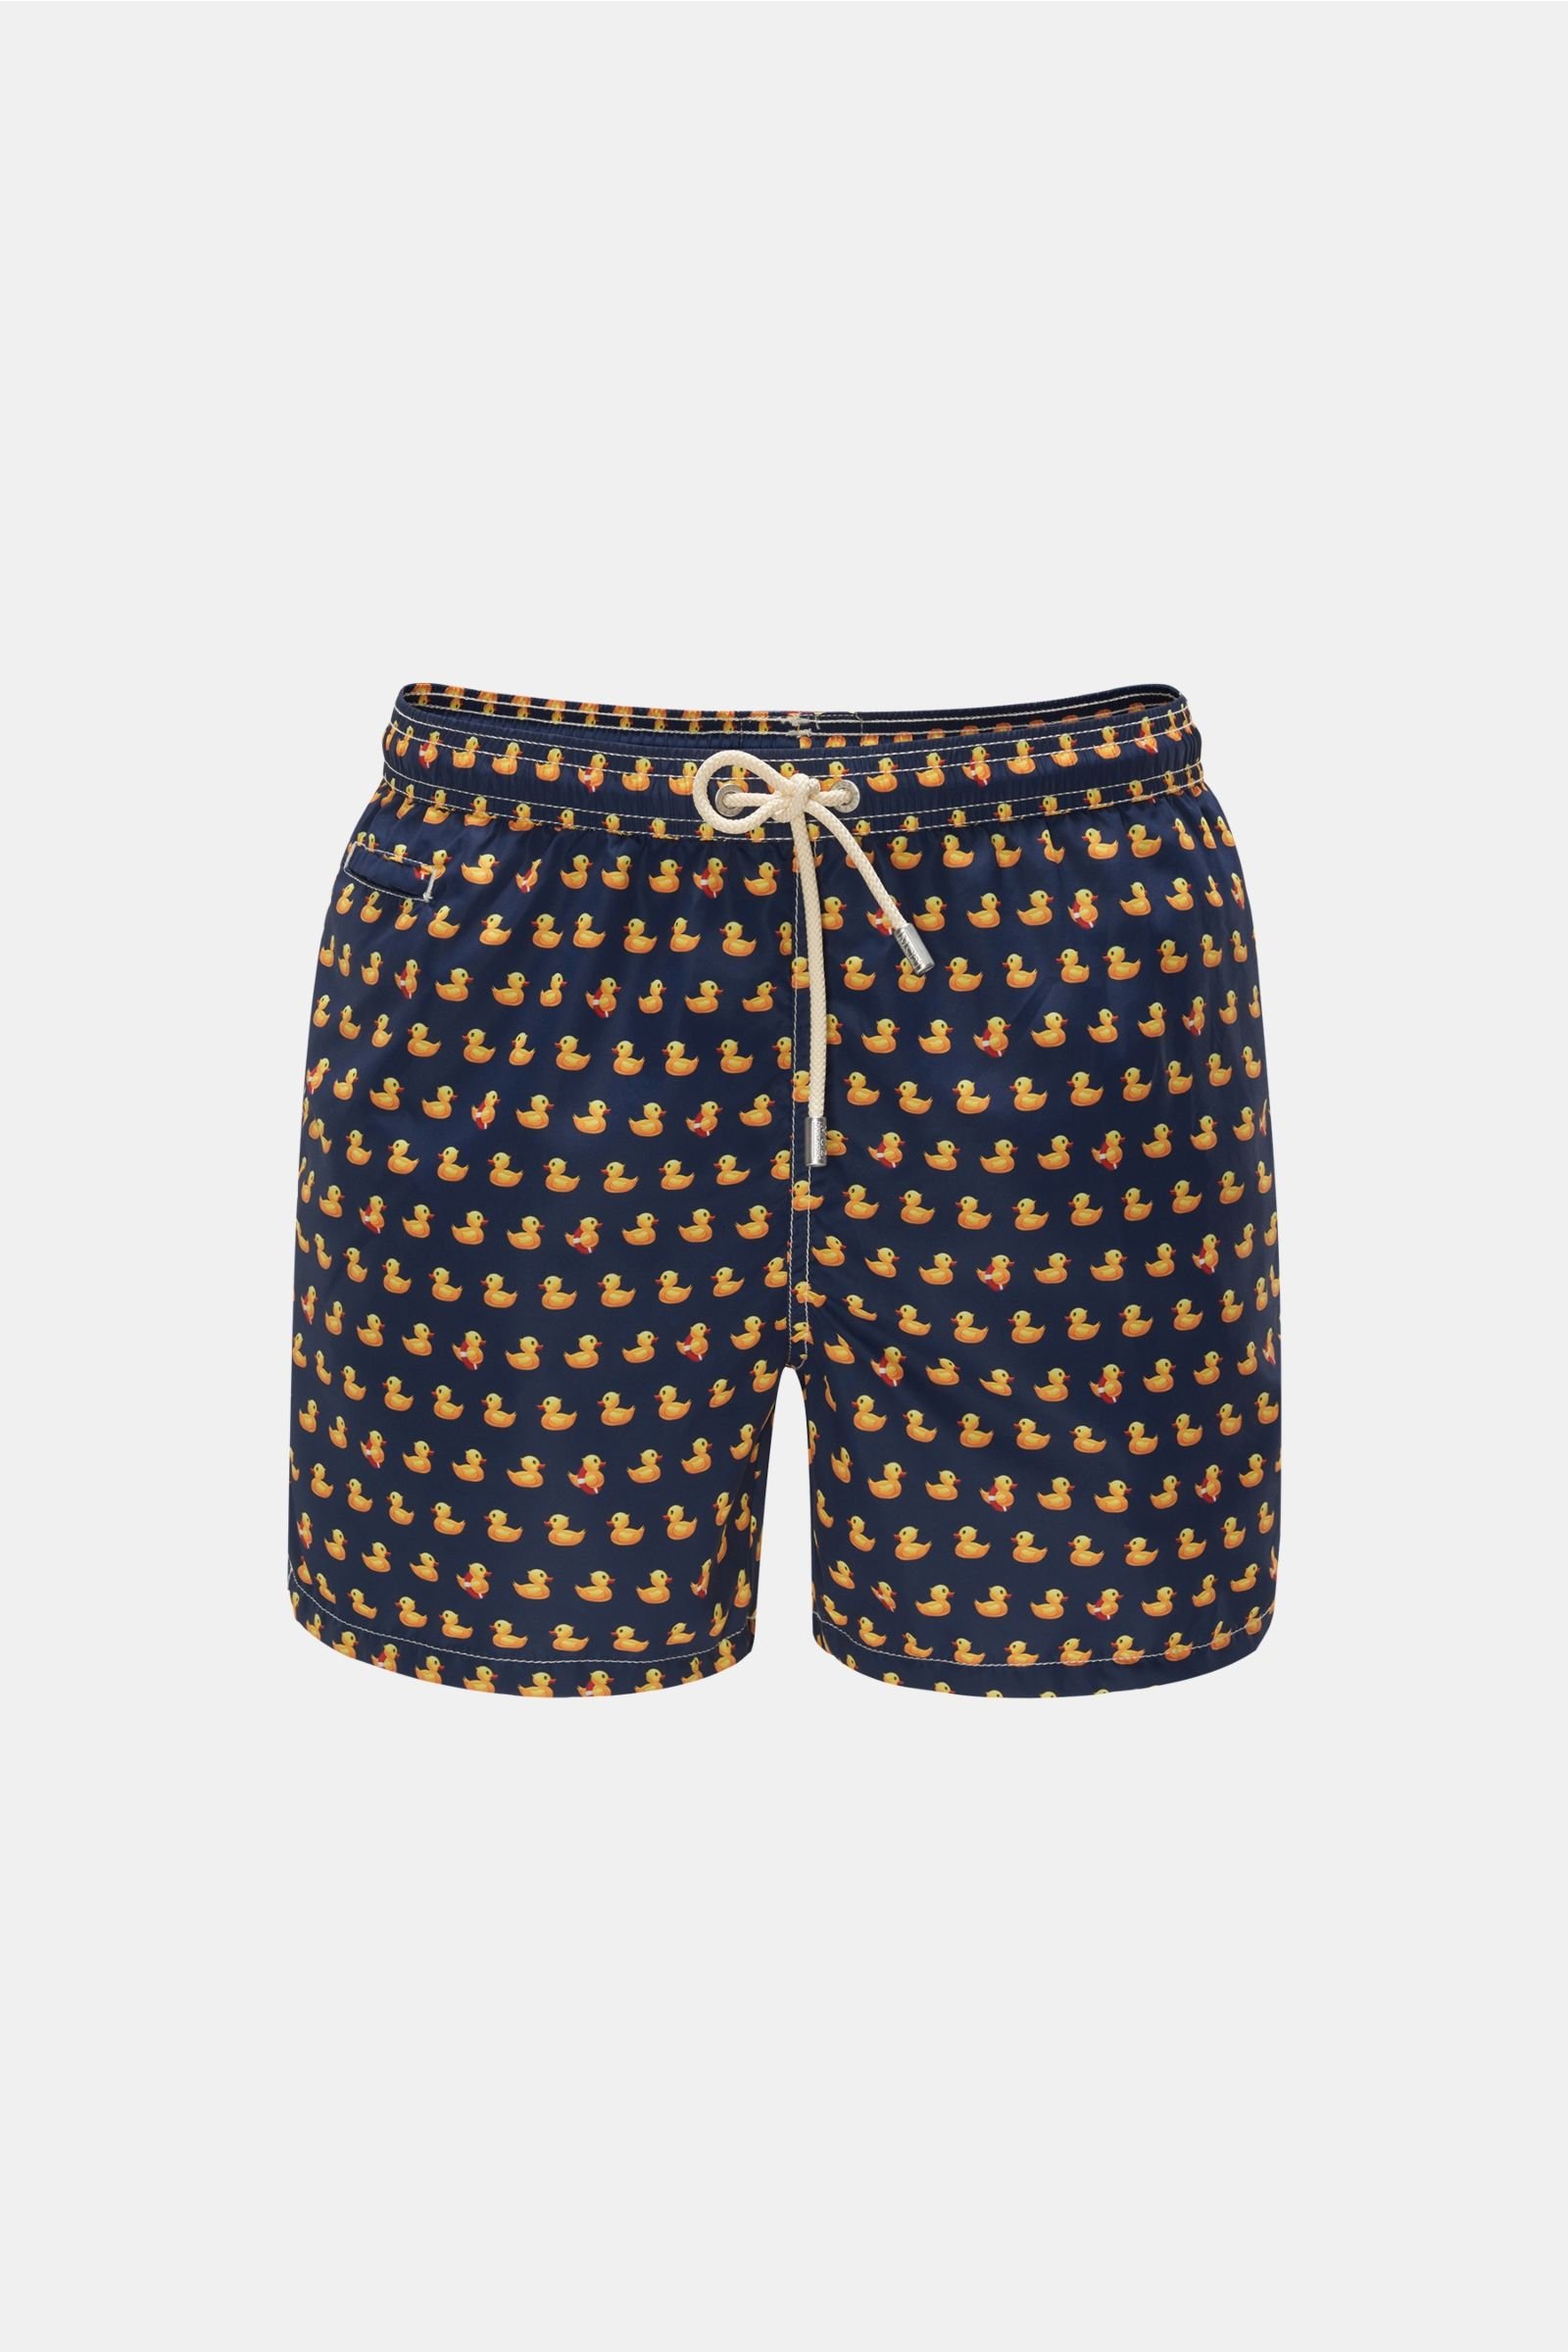 Swim shorts 'Ducky' navy/yellow patterned